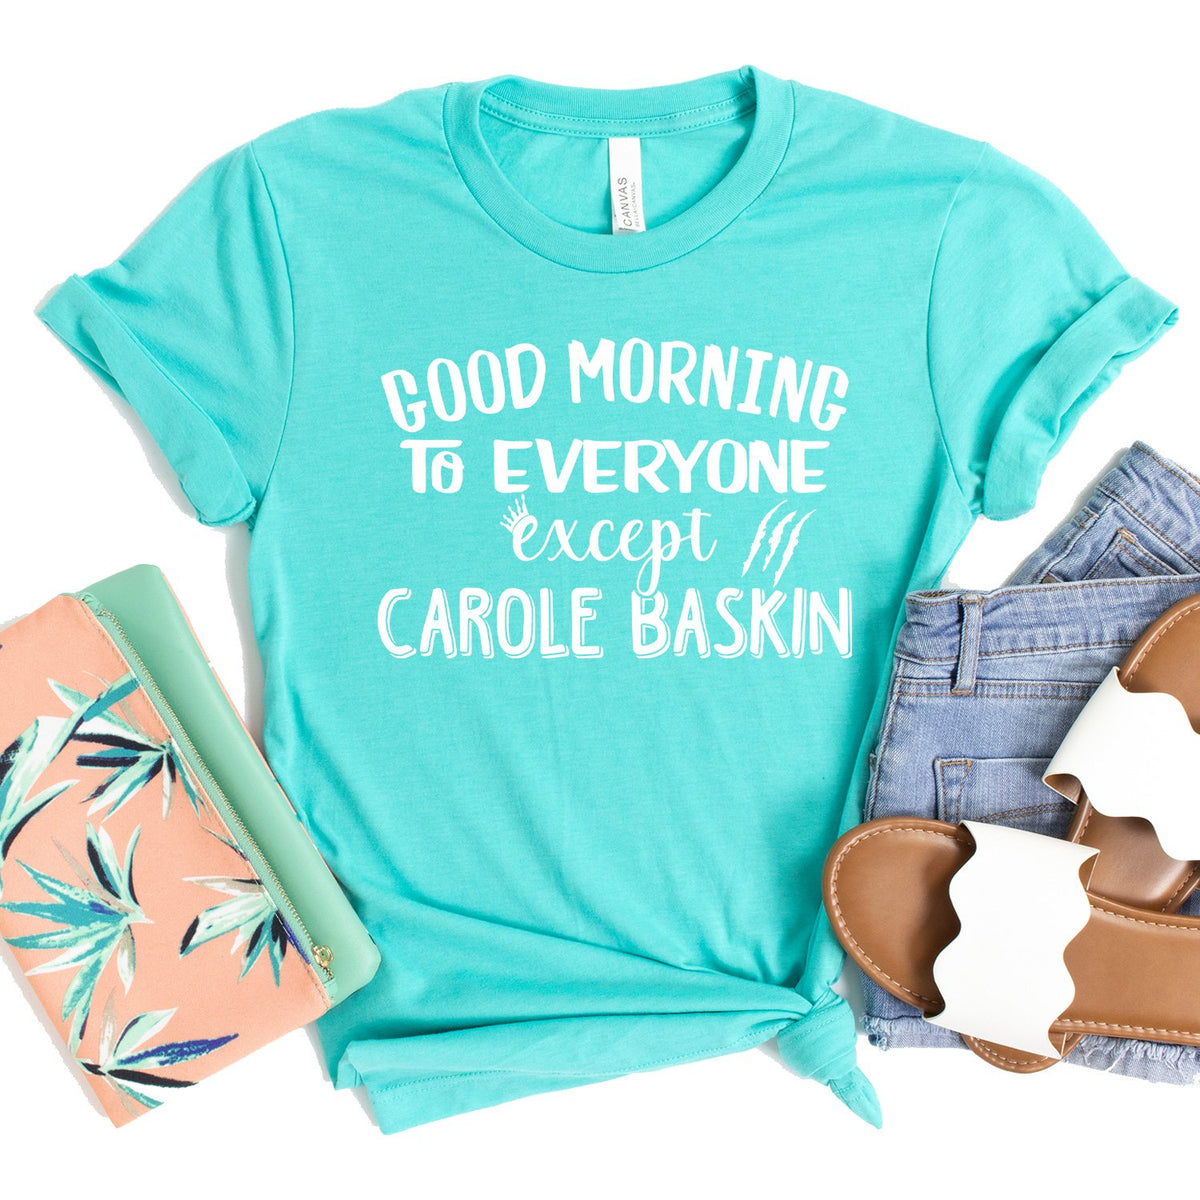 Good Morning to Everyone Except Carole Baskin - Short Sleeve Tee Shirt